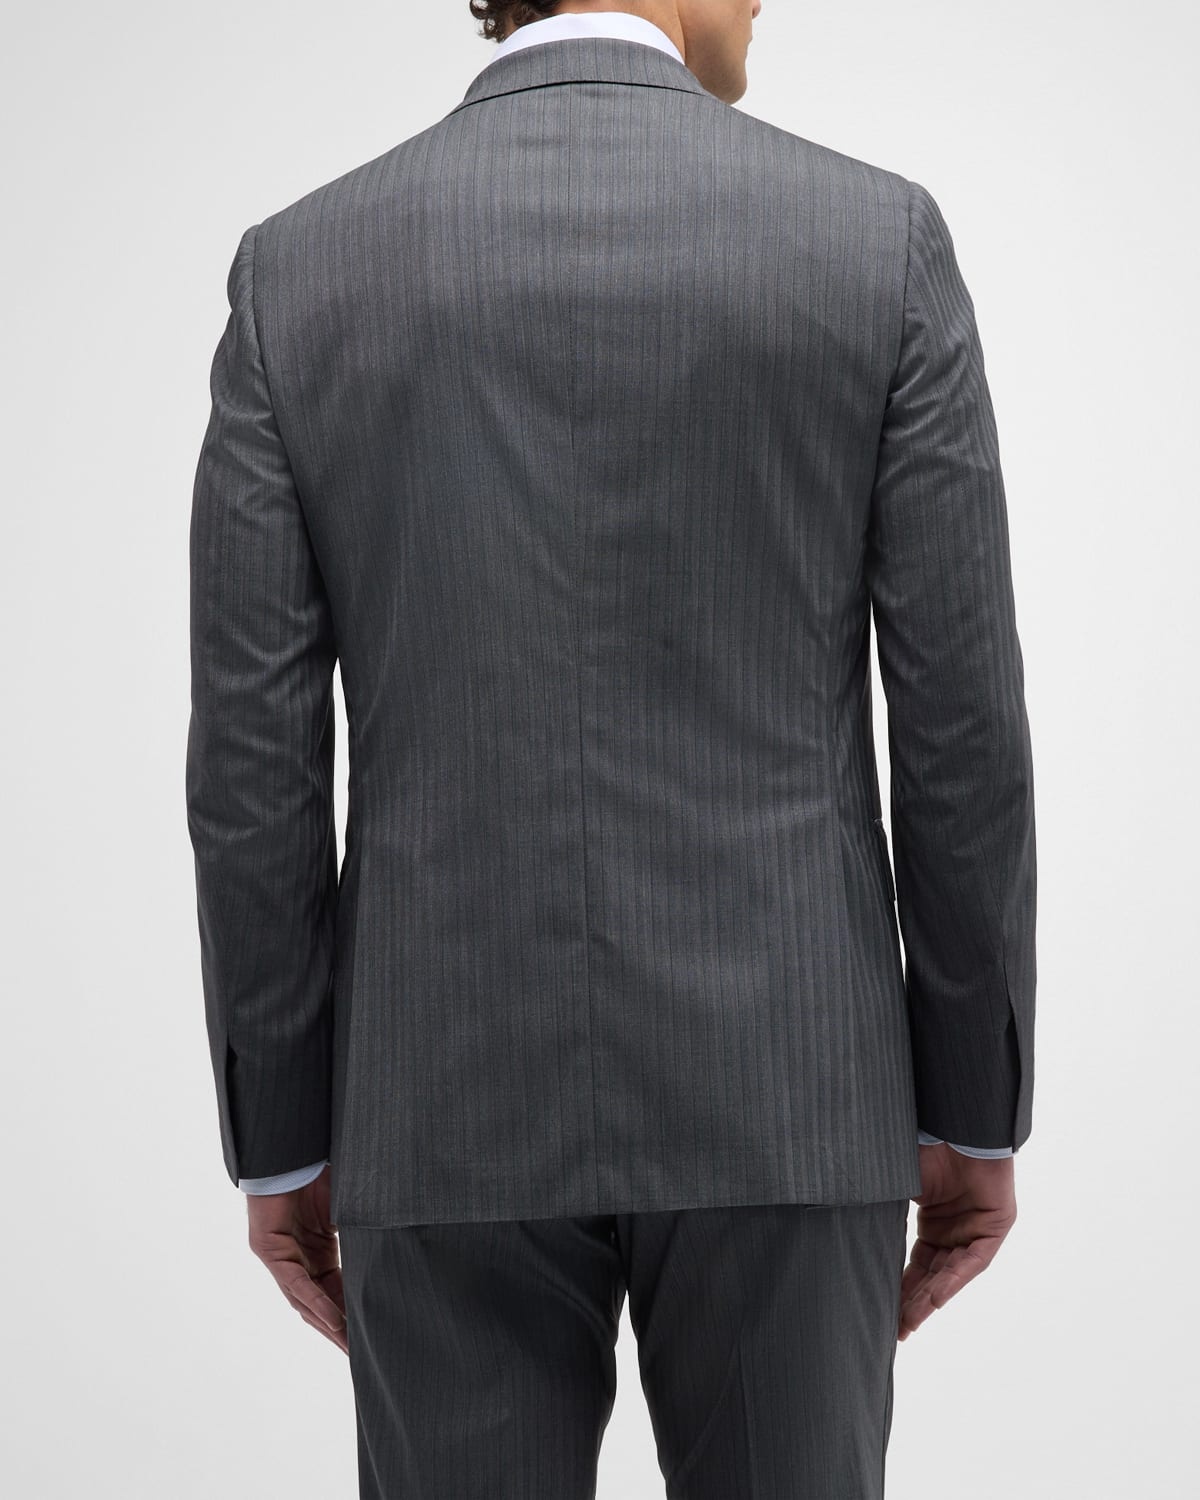 Men's Tonal Striped Wool Suit - 6